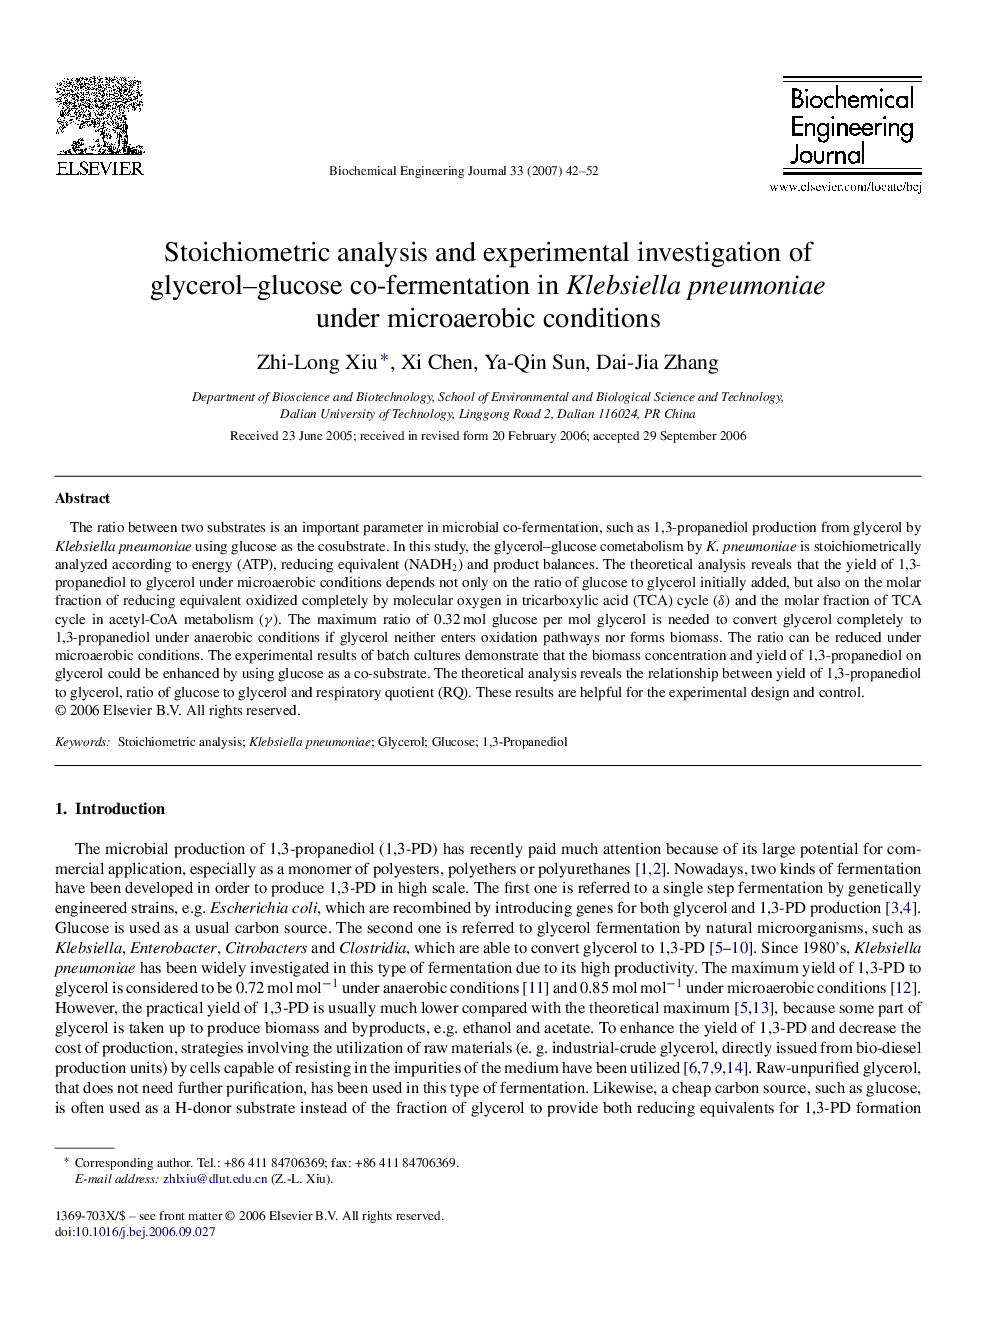 Stoichiometric analysis and experimental investigation of glycerol–glucose co-fermentation in Klebsiella pneumoniae under microaerobic conditions